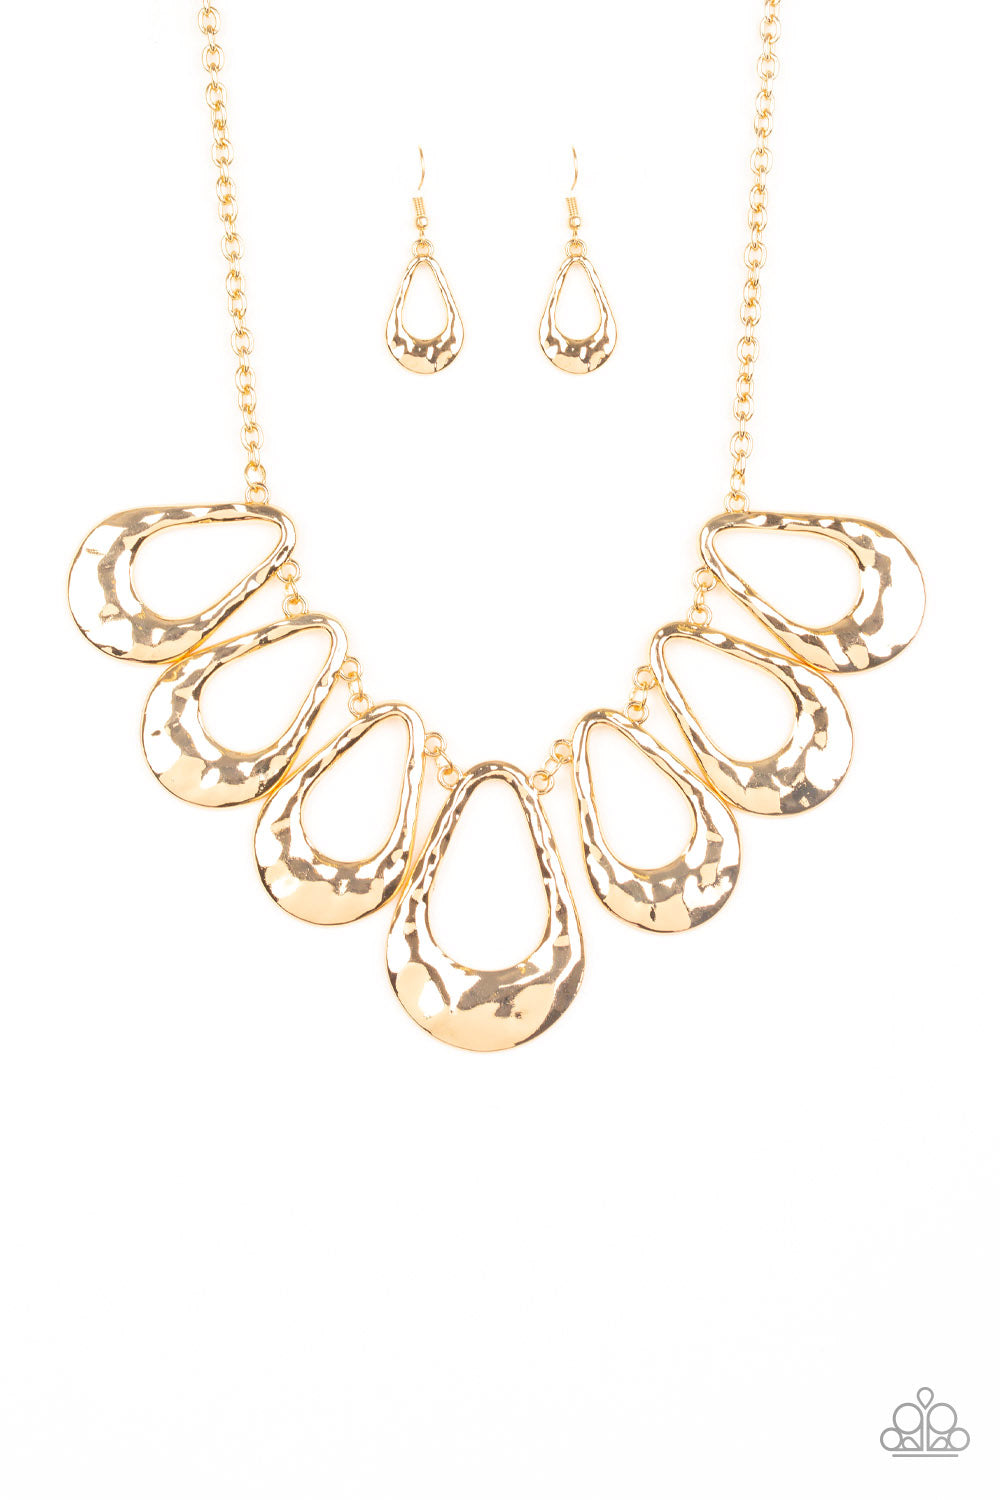 Teardrop Envy Gold Paparazzi Necklaces Cashmere Pink Jewels - Cashmere Pink Jewels & Accessories, Cashmere Pink Jewels & Accessories - Paparazzi